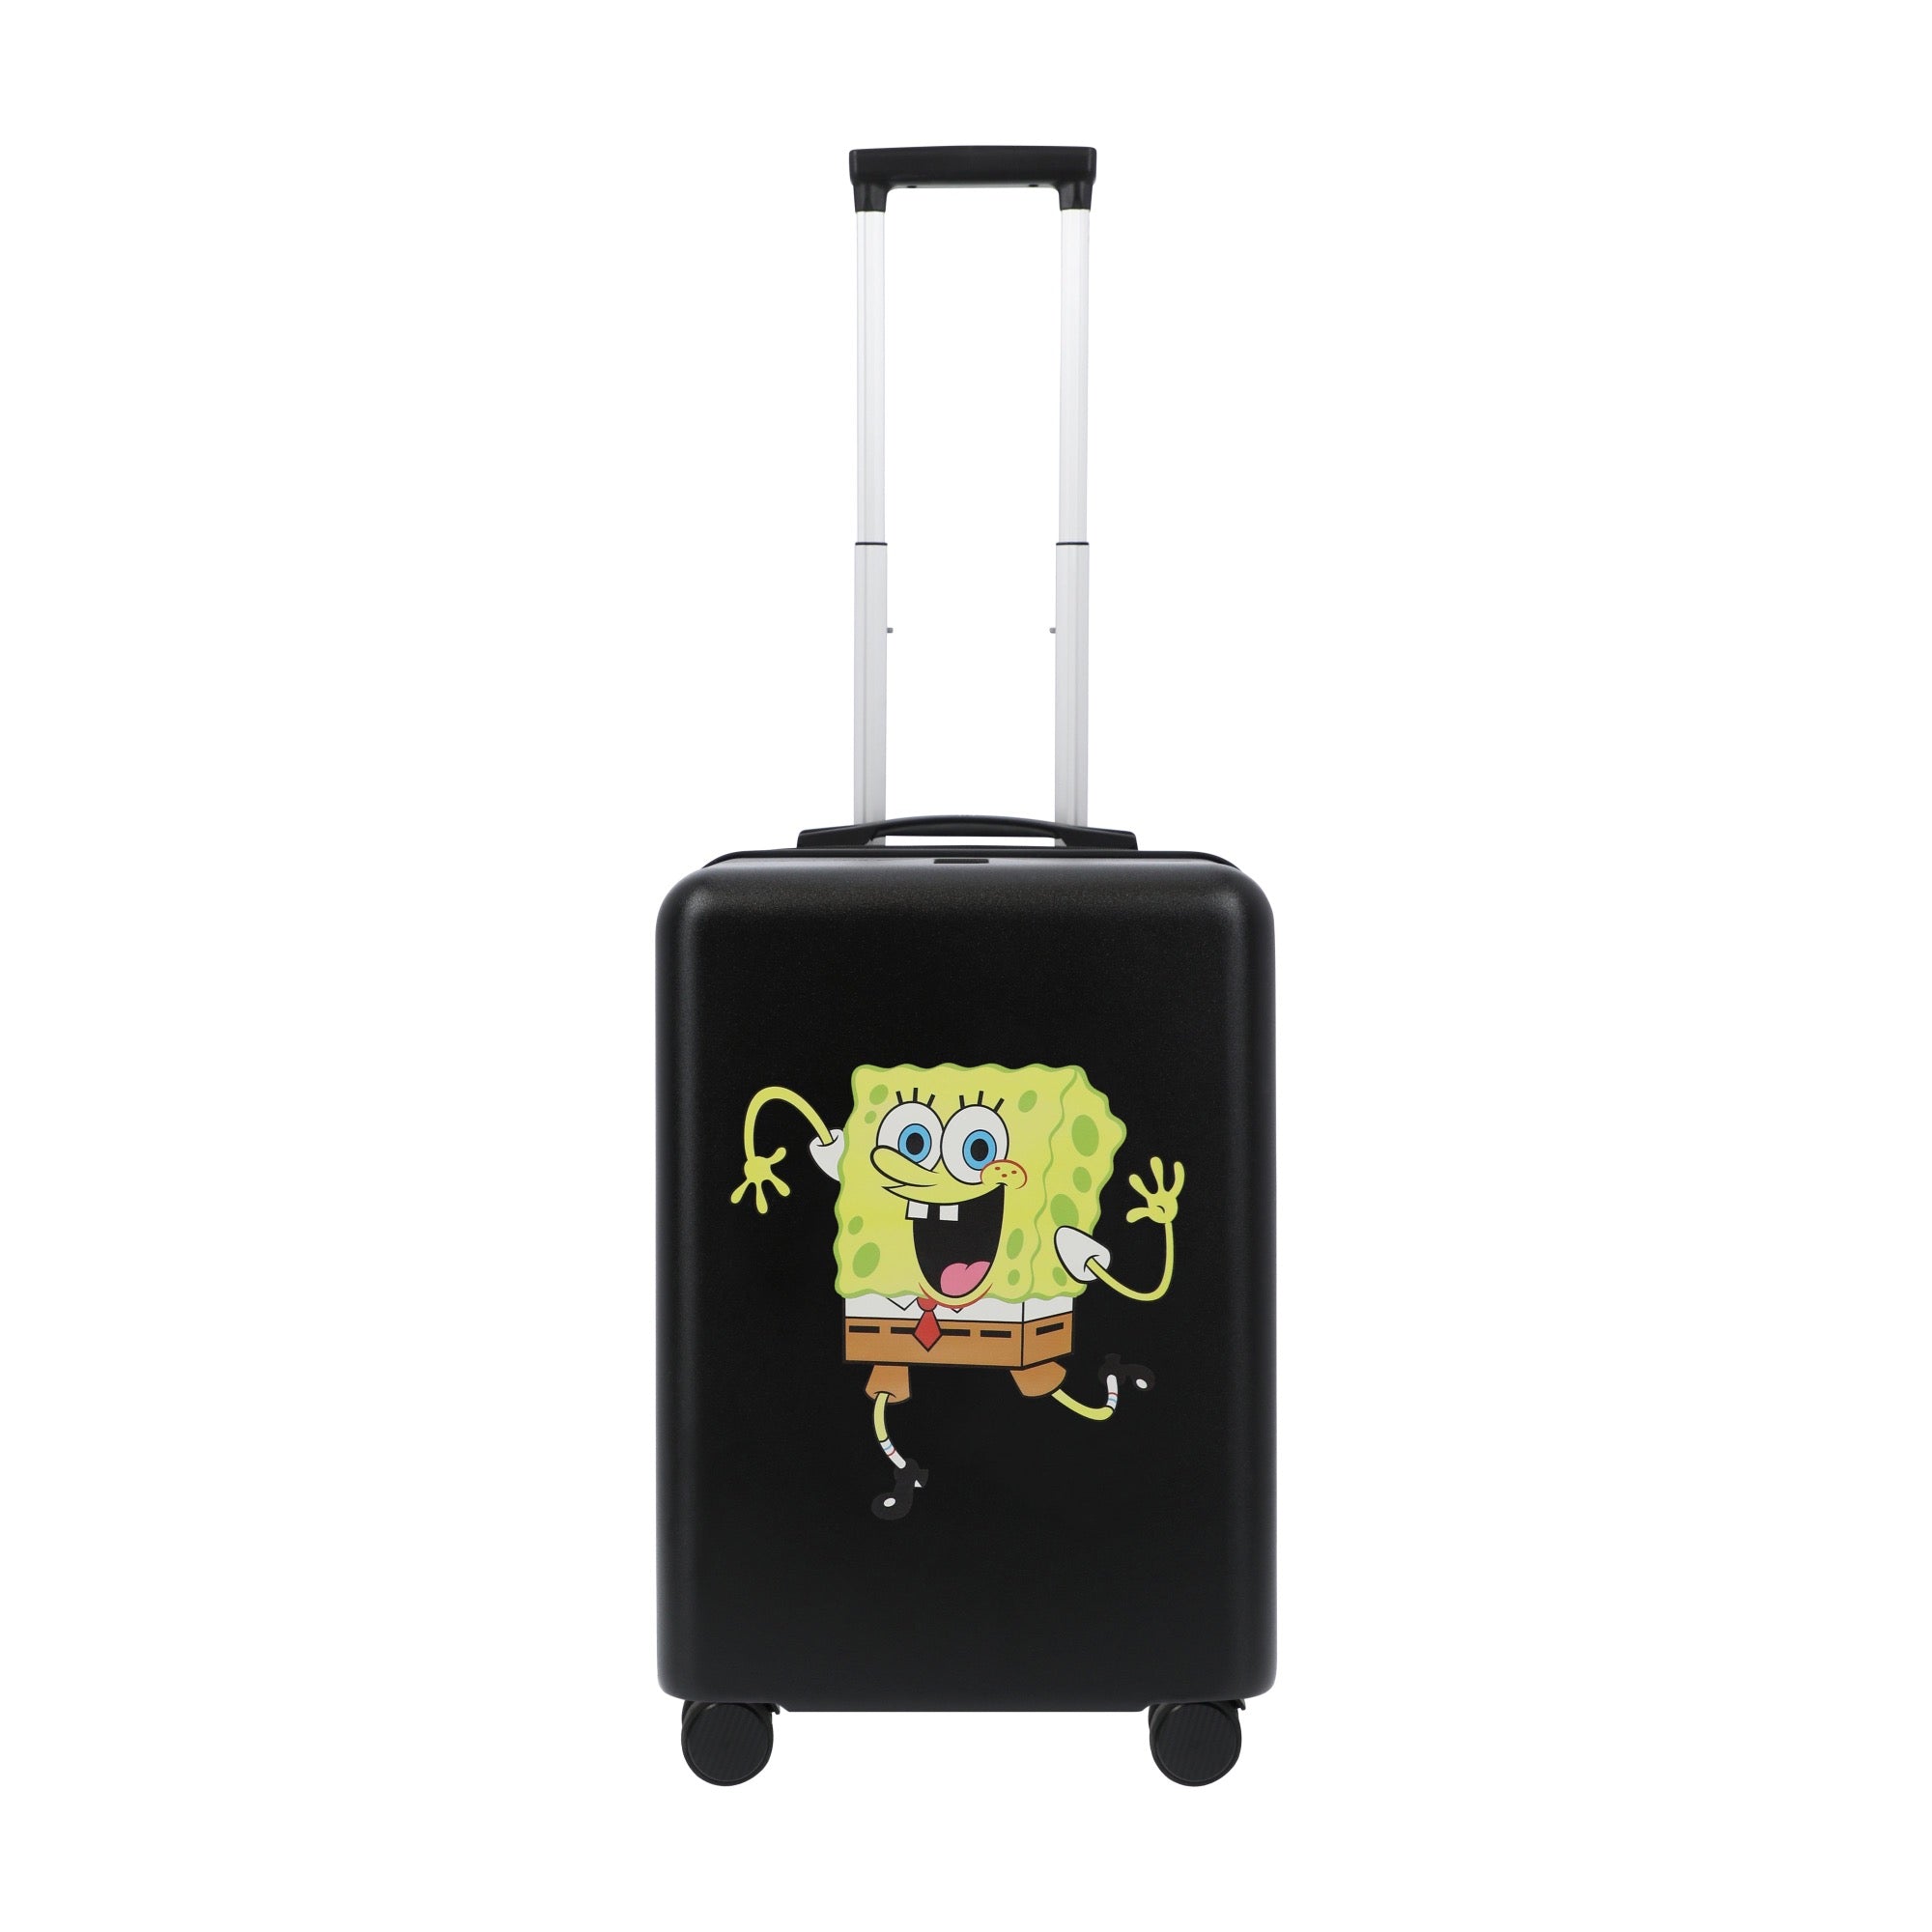 Nickelodeon SpongeBob squarepants 22.5" black carry-on spinner suitcase luggage by Ful